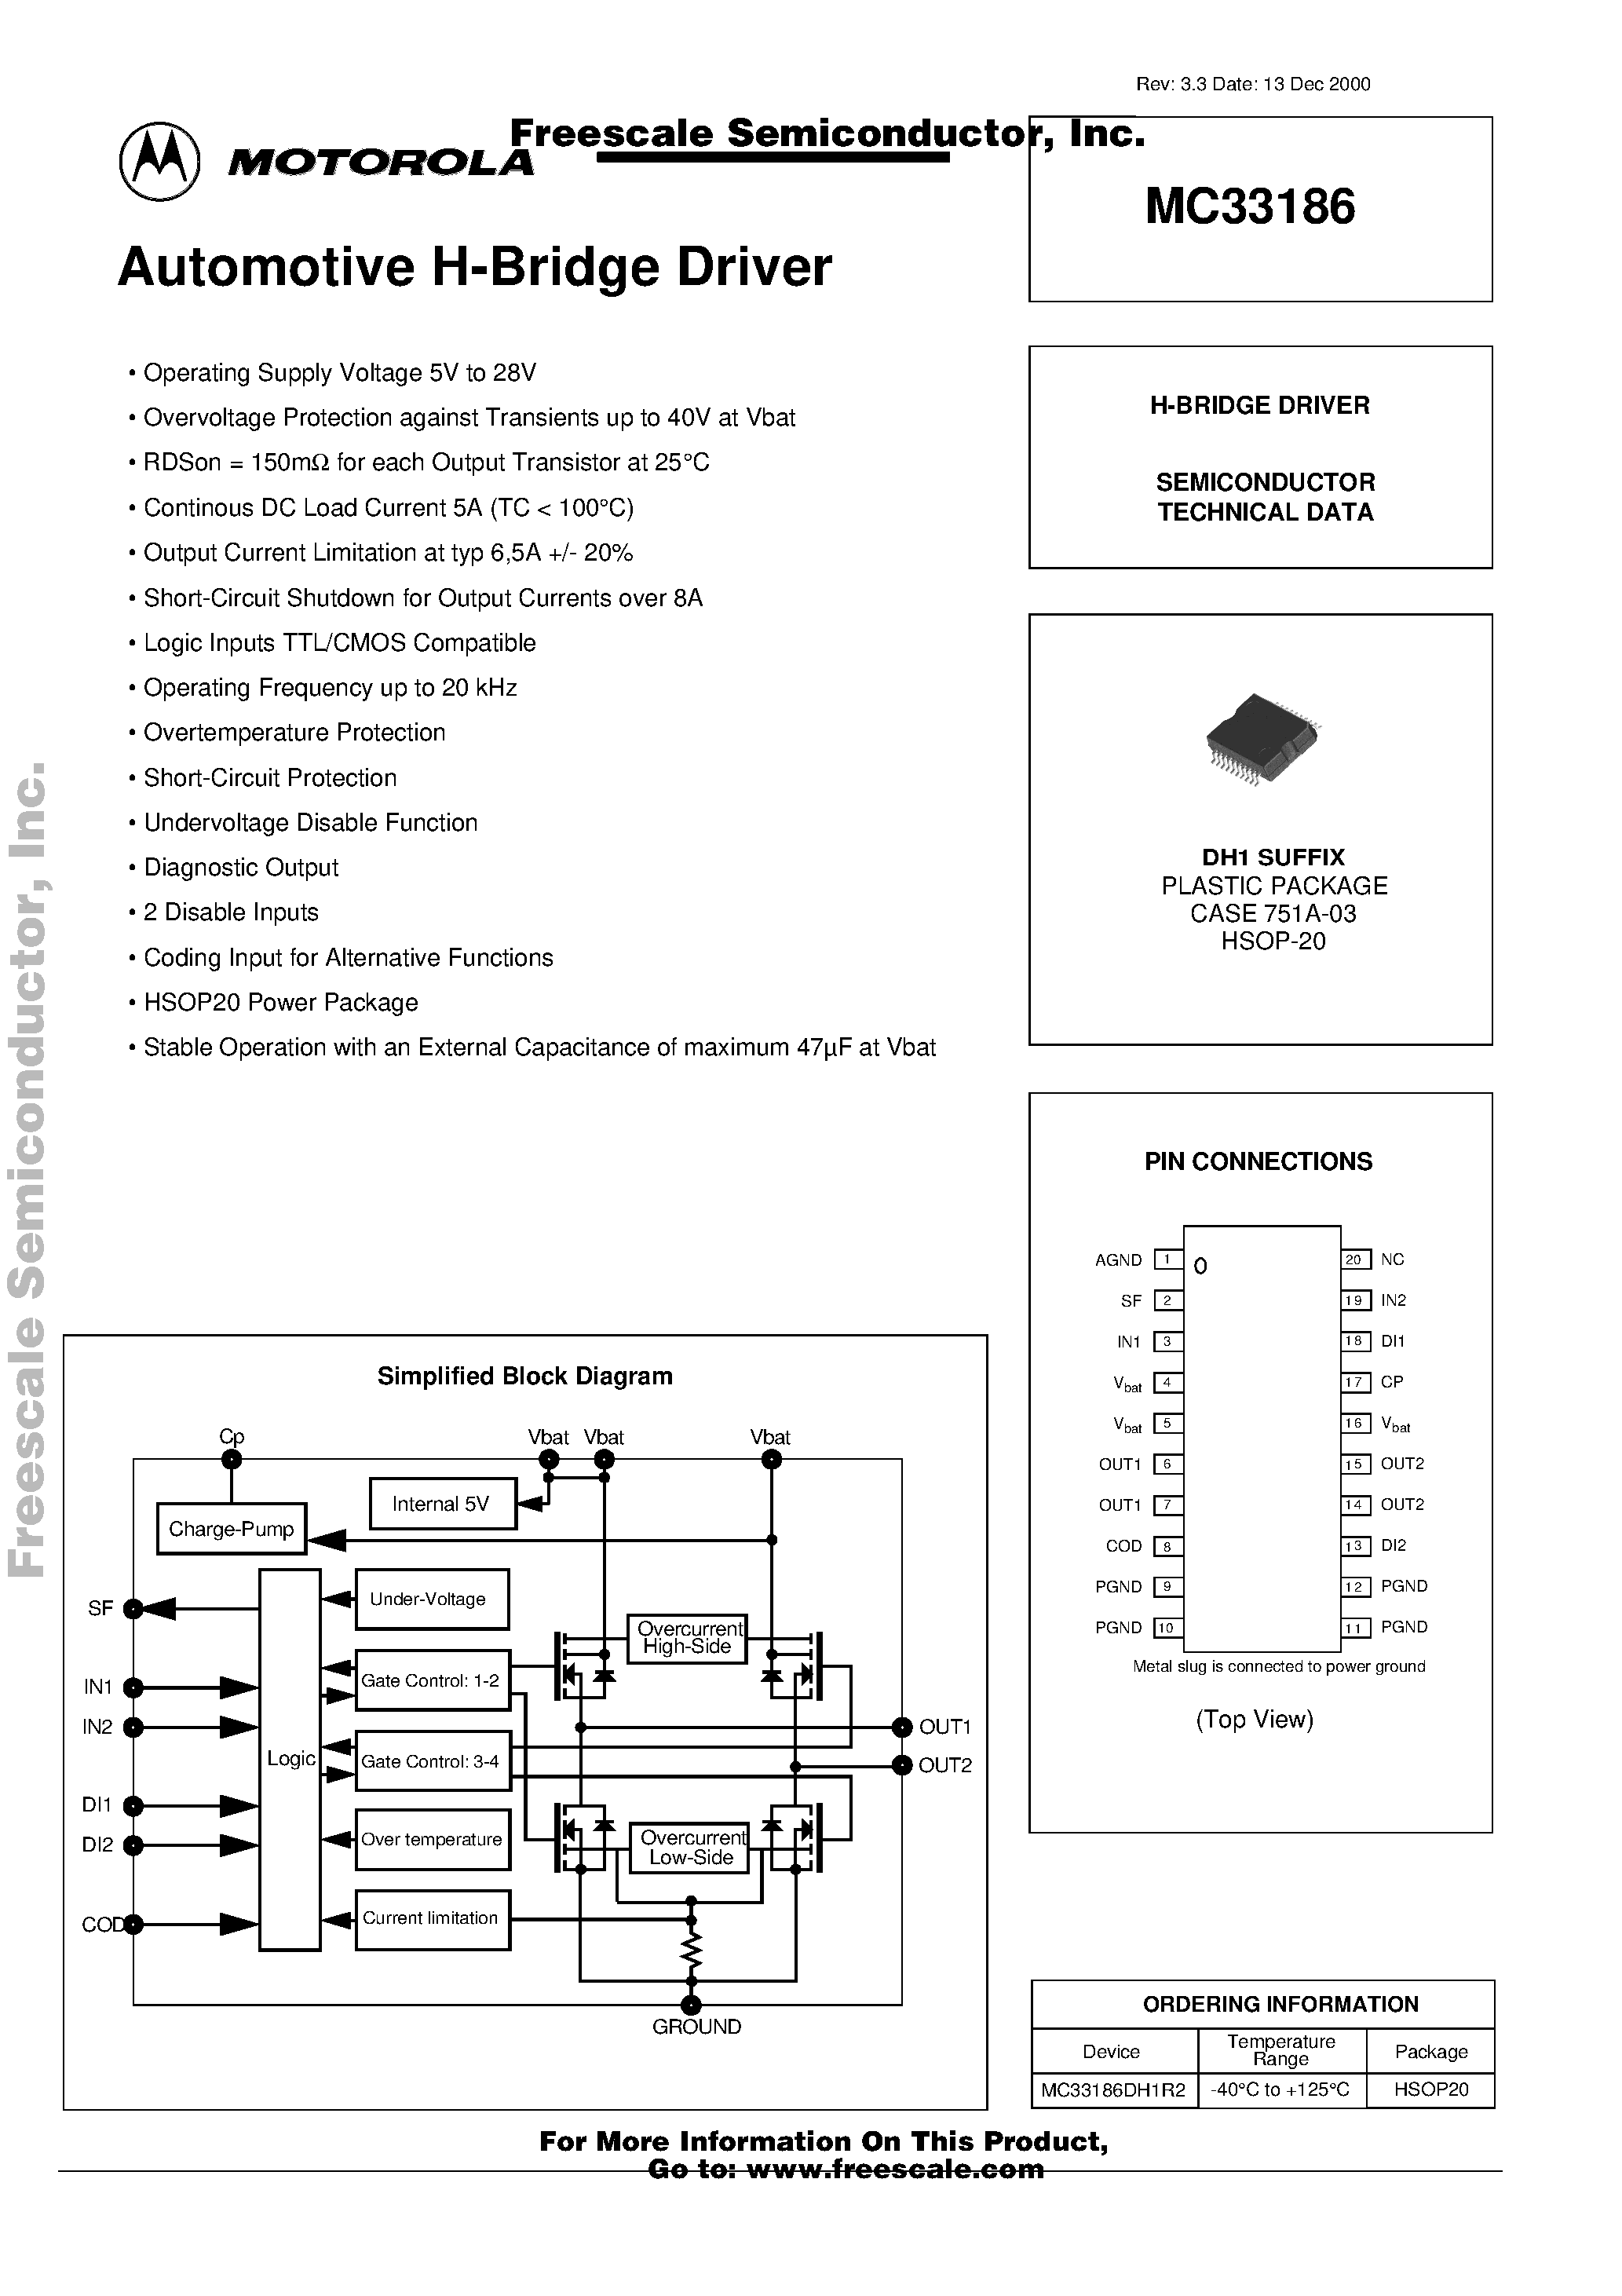 Datasheet MC33186 - Automotive H-Bridge Driver page 1